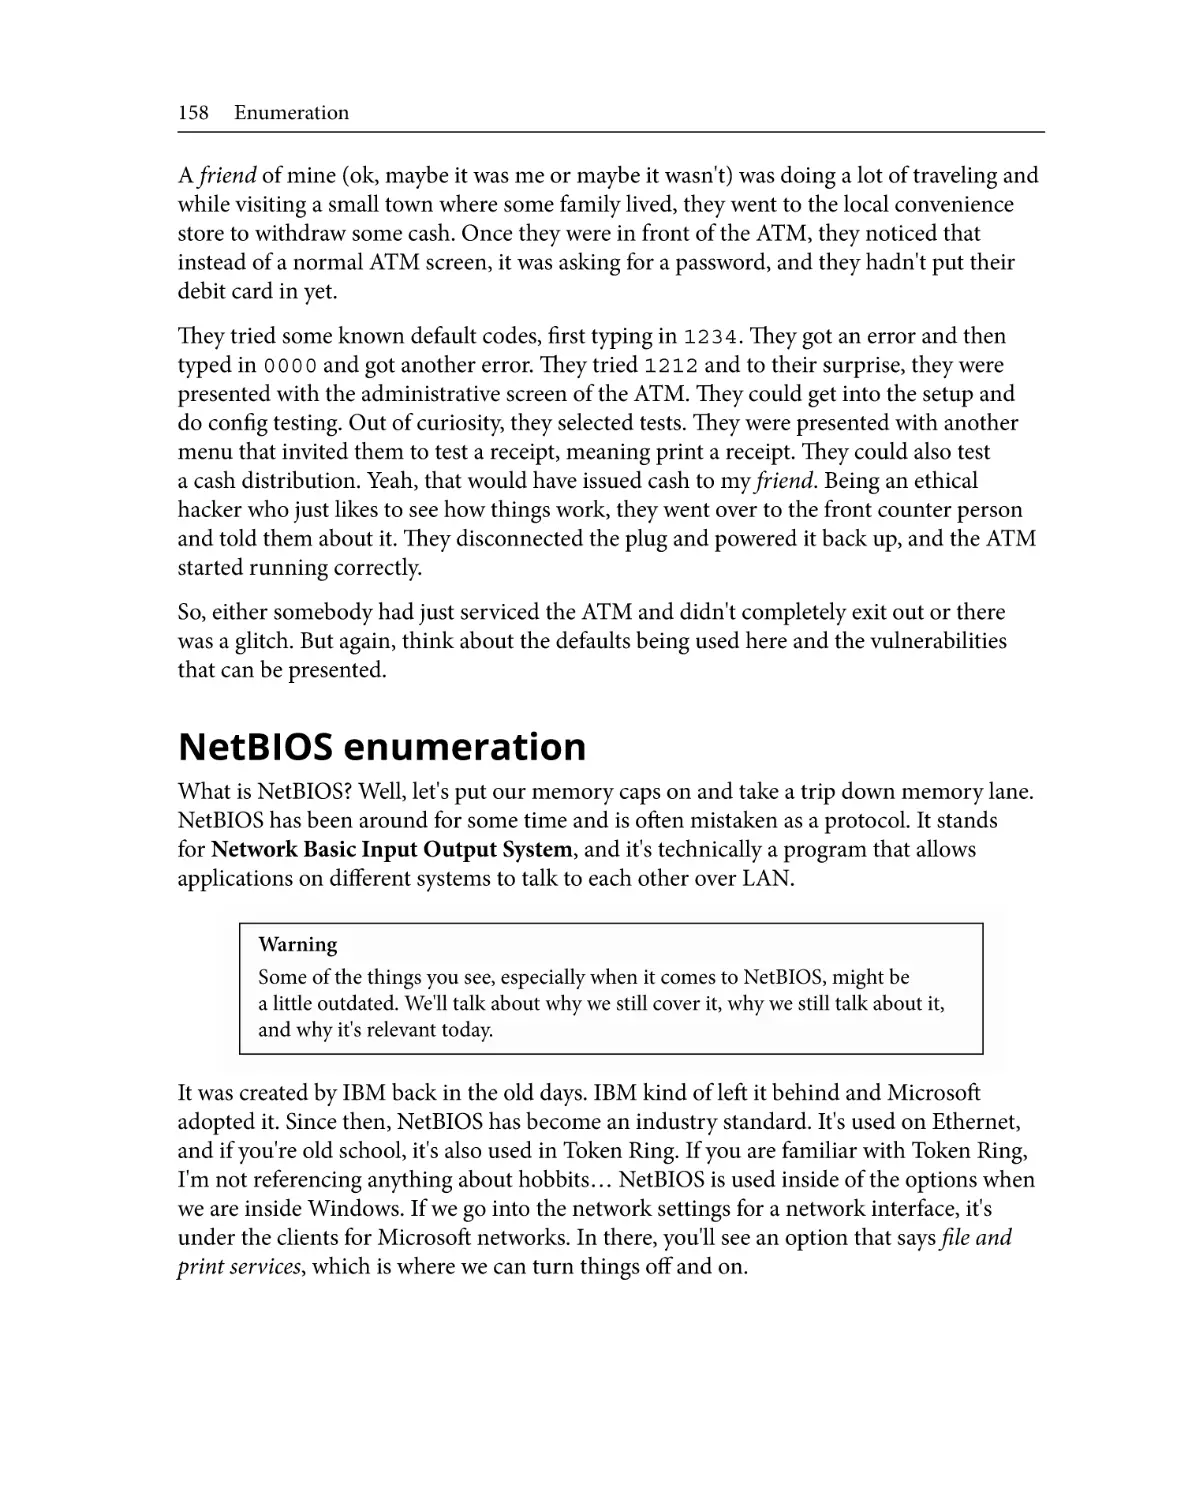 NetBIOS enumeration